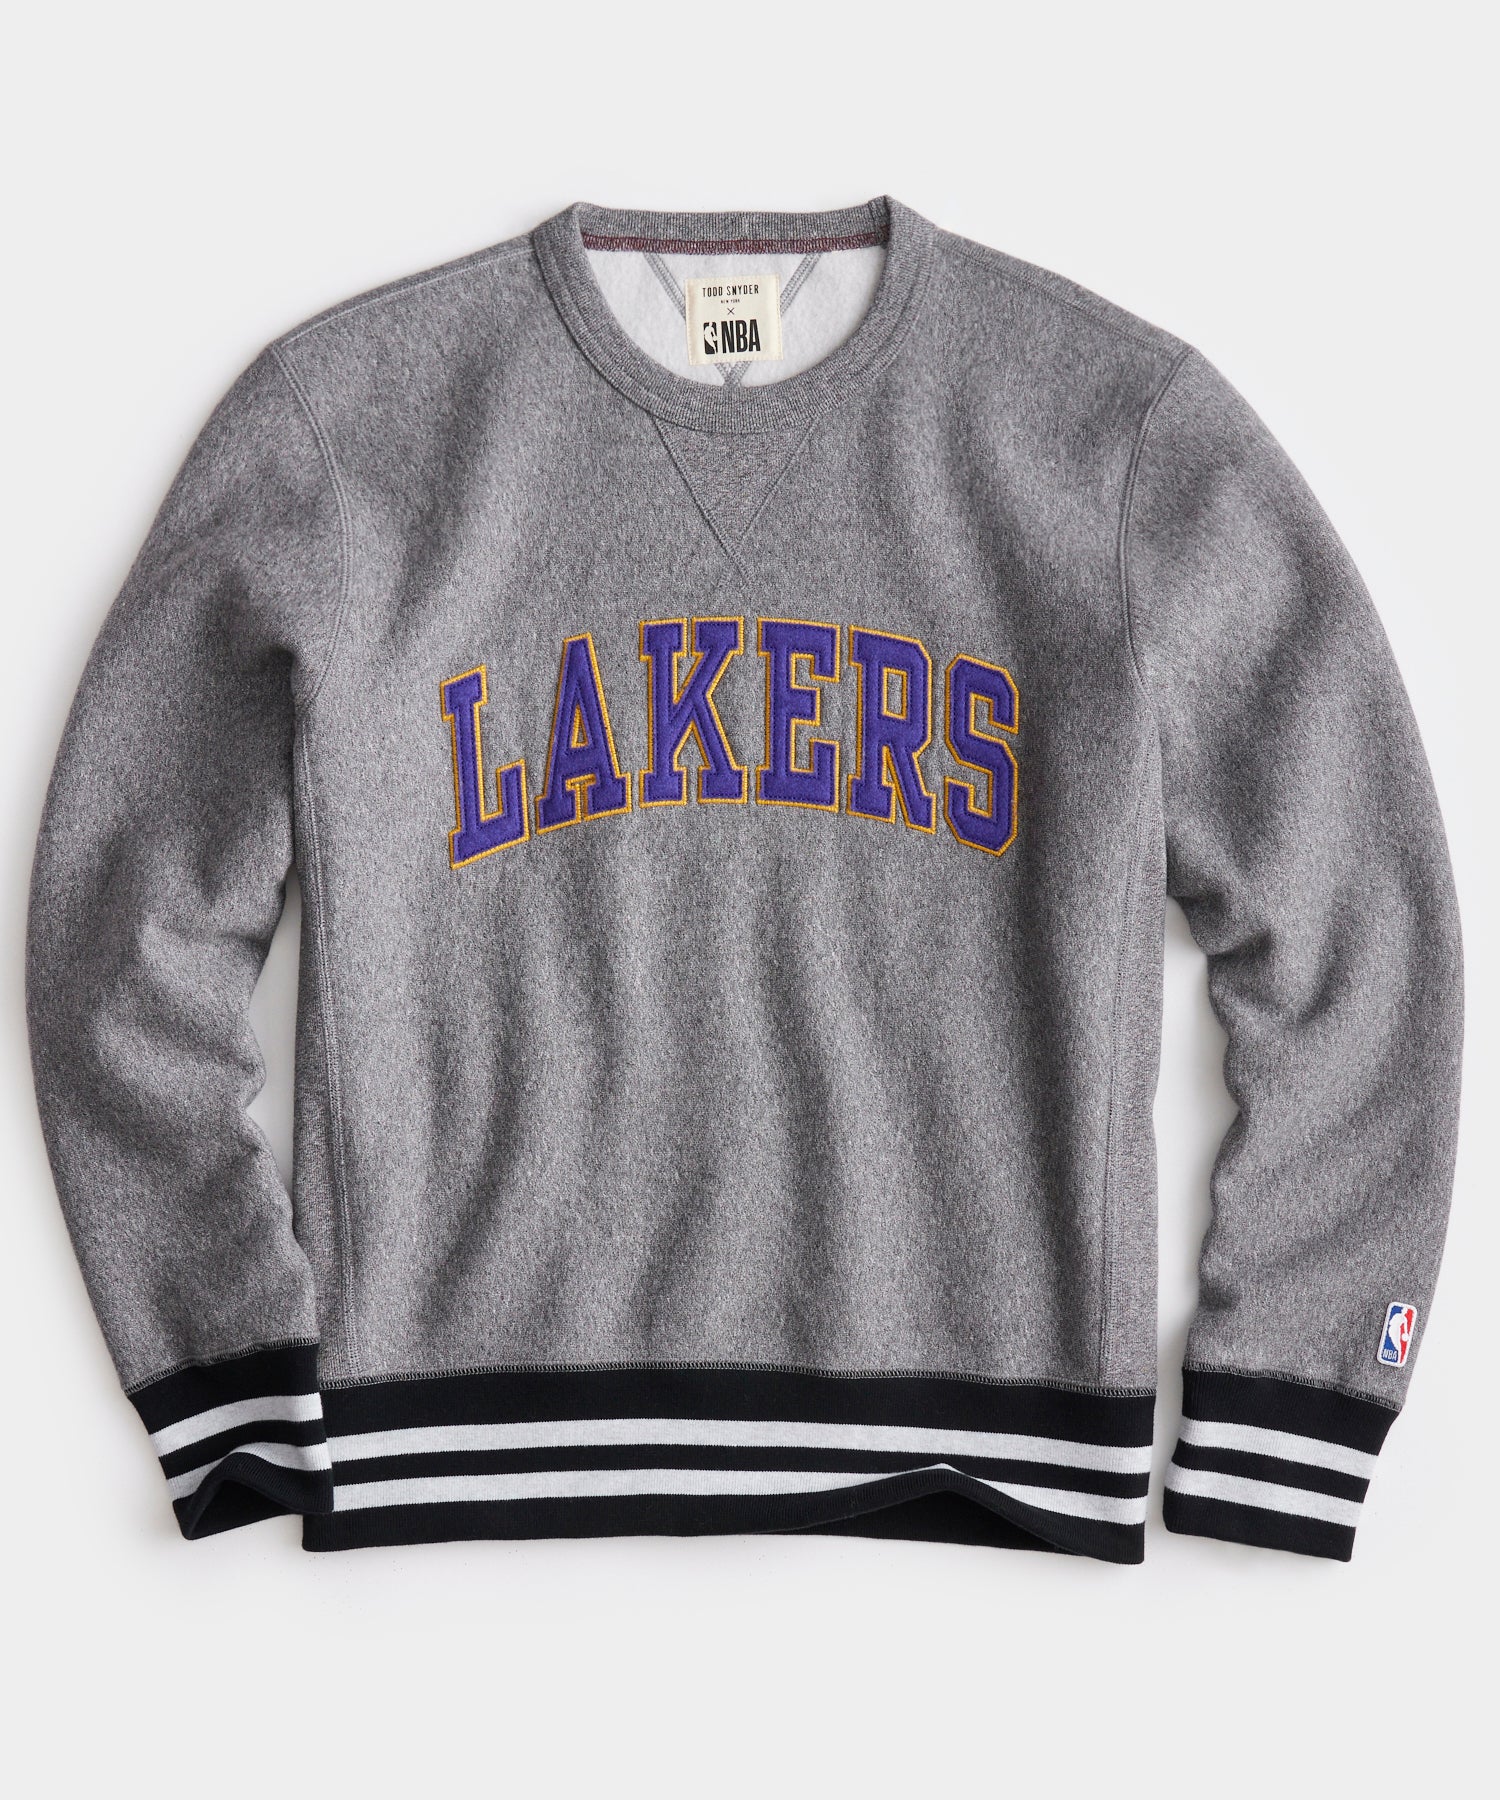 grey lakers sweater